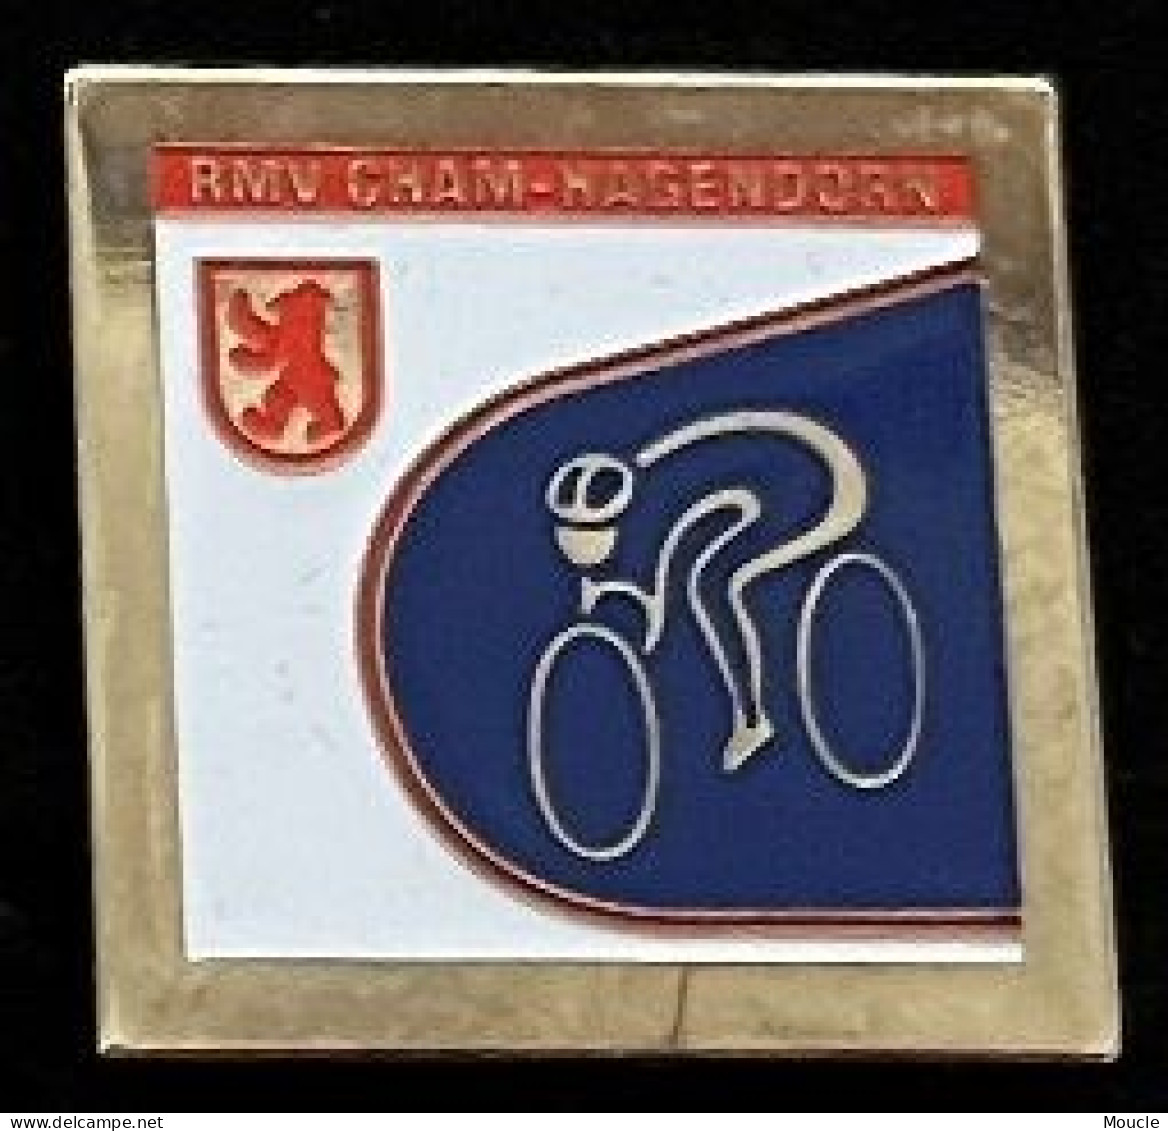 CYCLISME - VELO - BIKE - CYCLISTE - CYCLES - RMV - VELO CLUB - CHAM - HAGENDORN - SUISSE - SCHWEIZ - SWITZERLAND -  (33) - Cycling